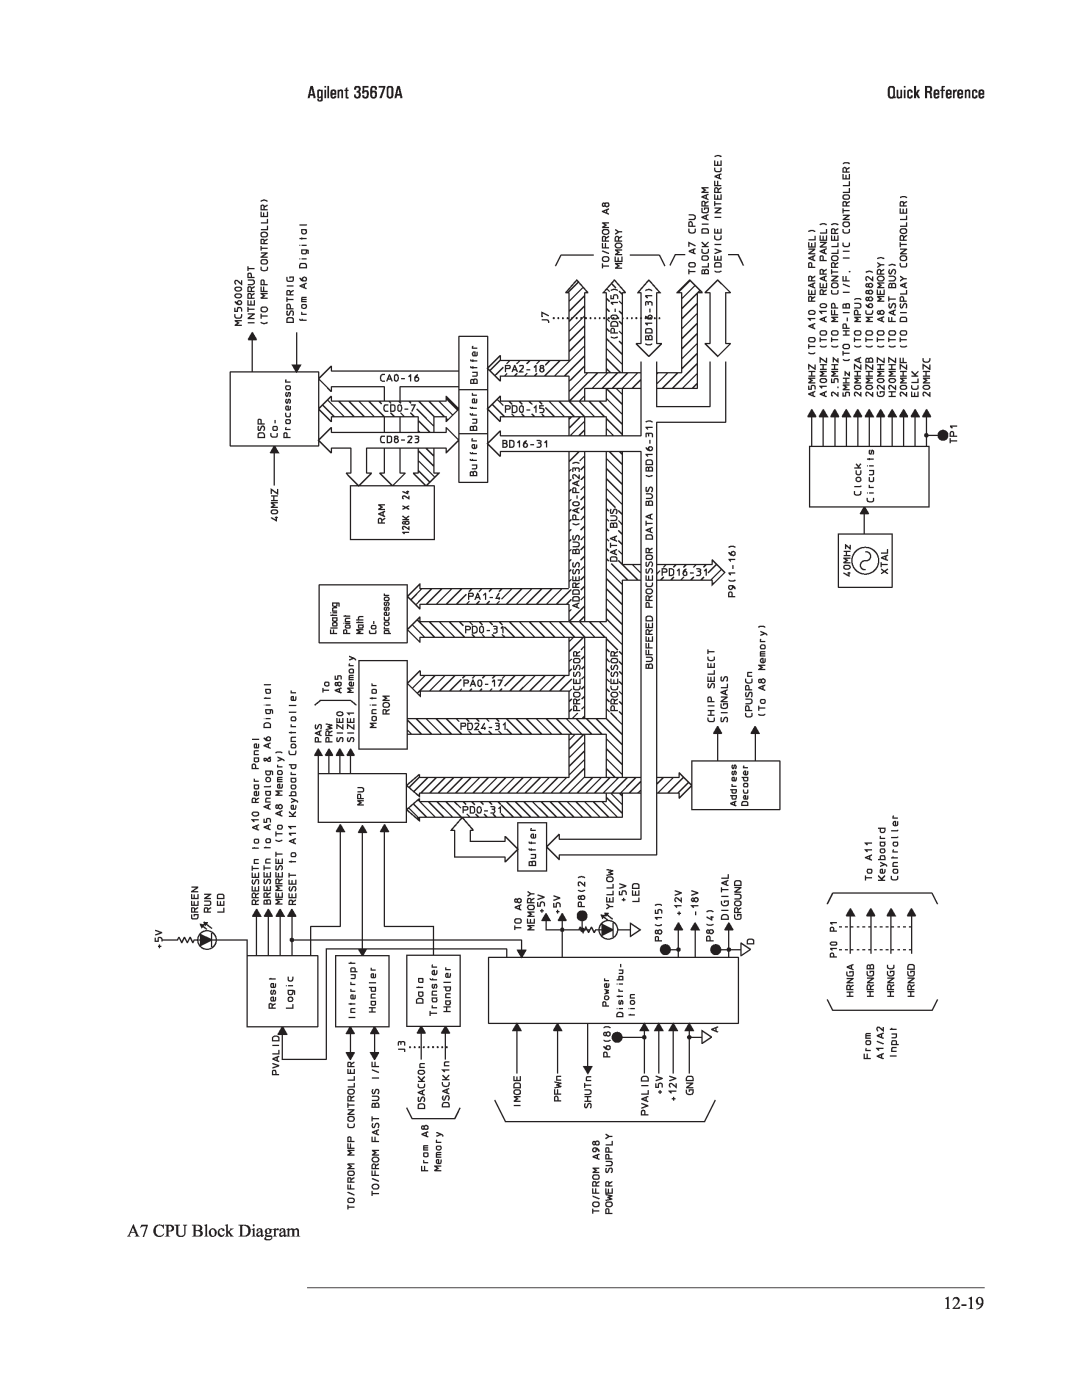 Agilent Technologies 35670-90066 manual Agilent 35670A, A7 CPU Block Diagram, Quick Reference 